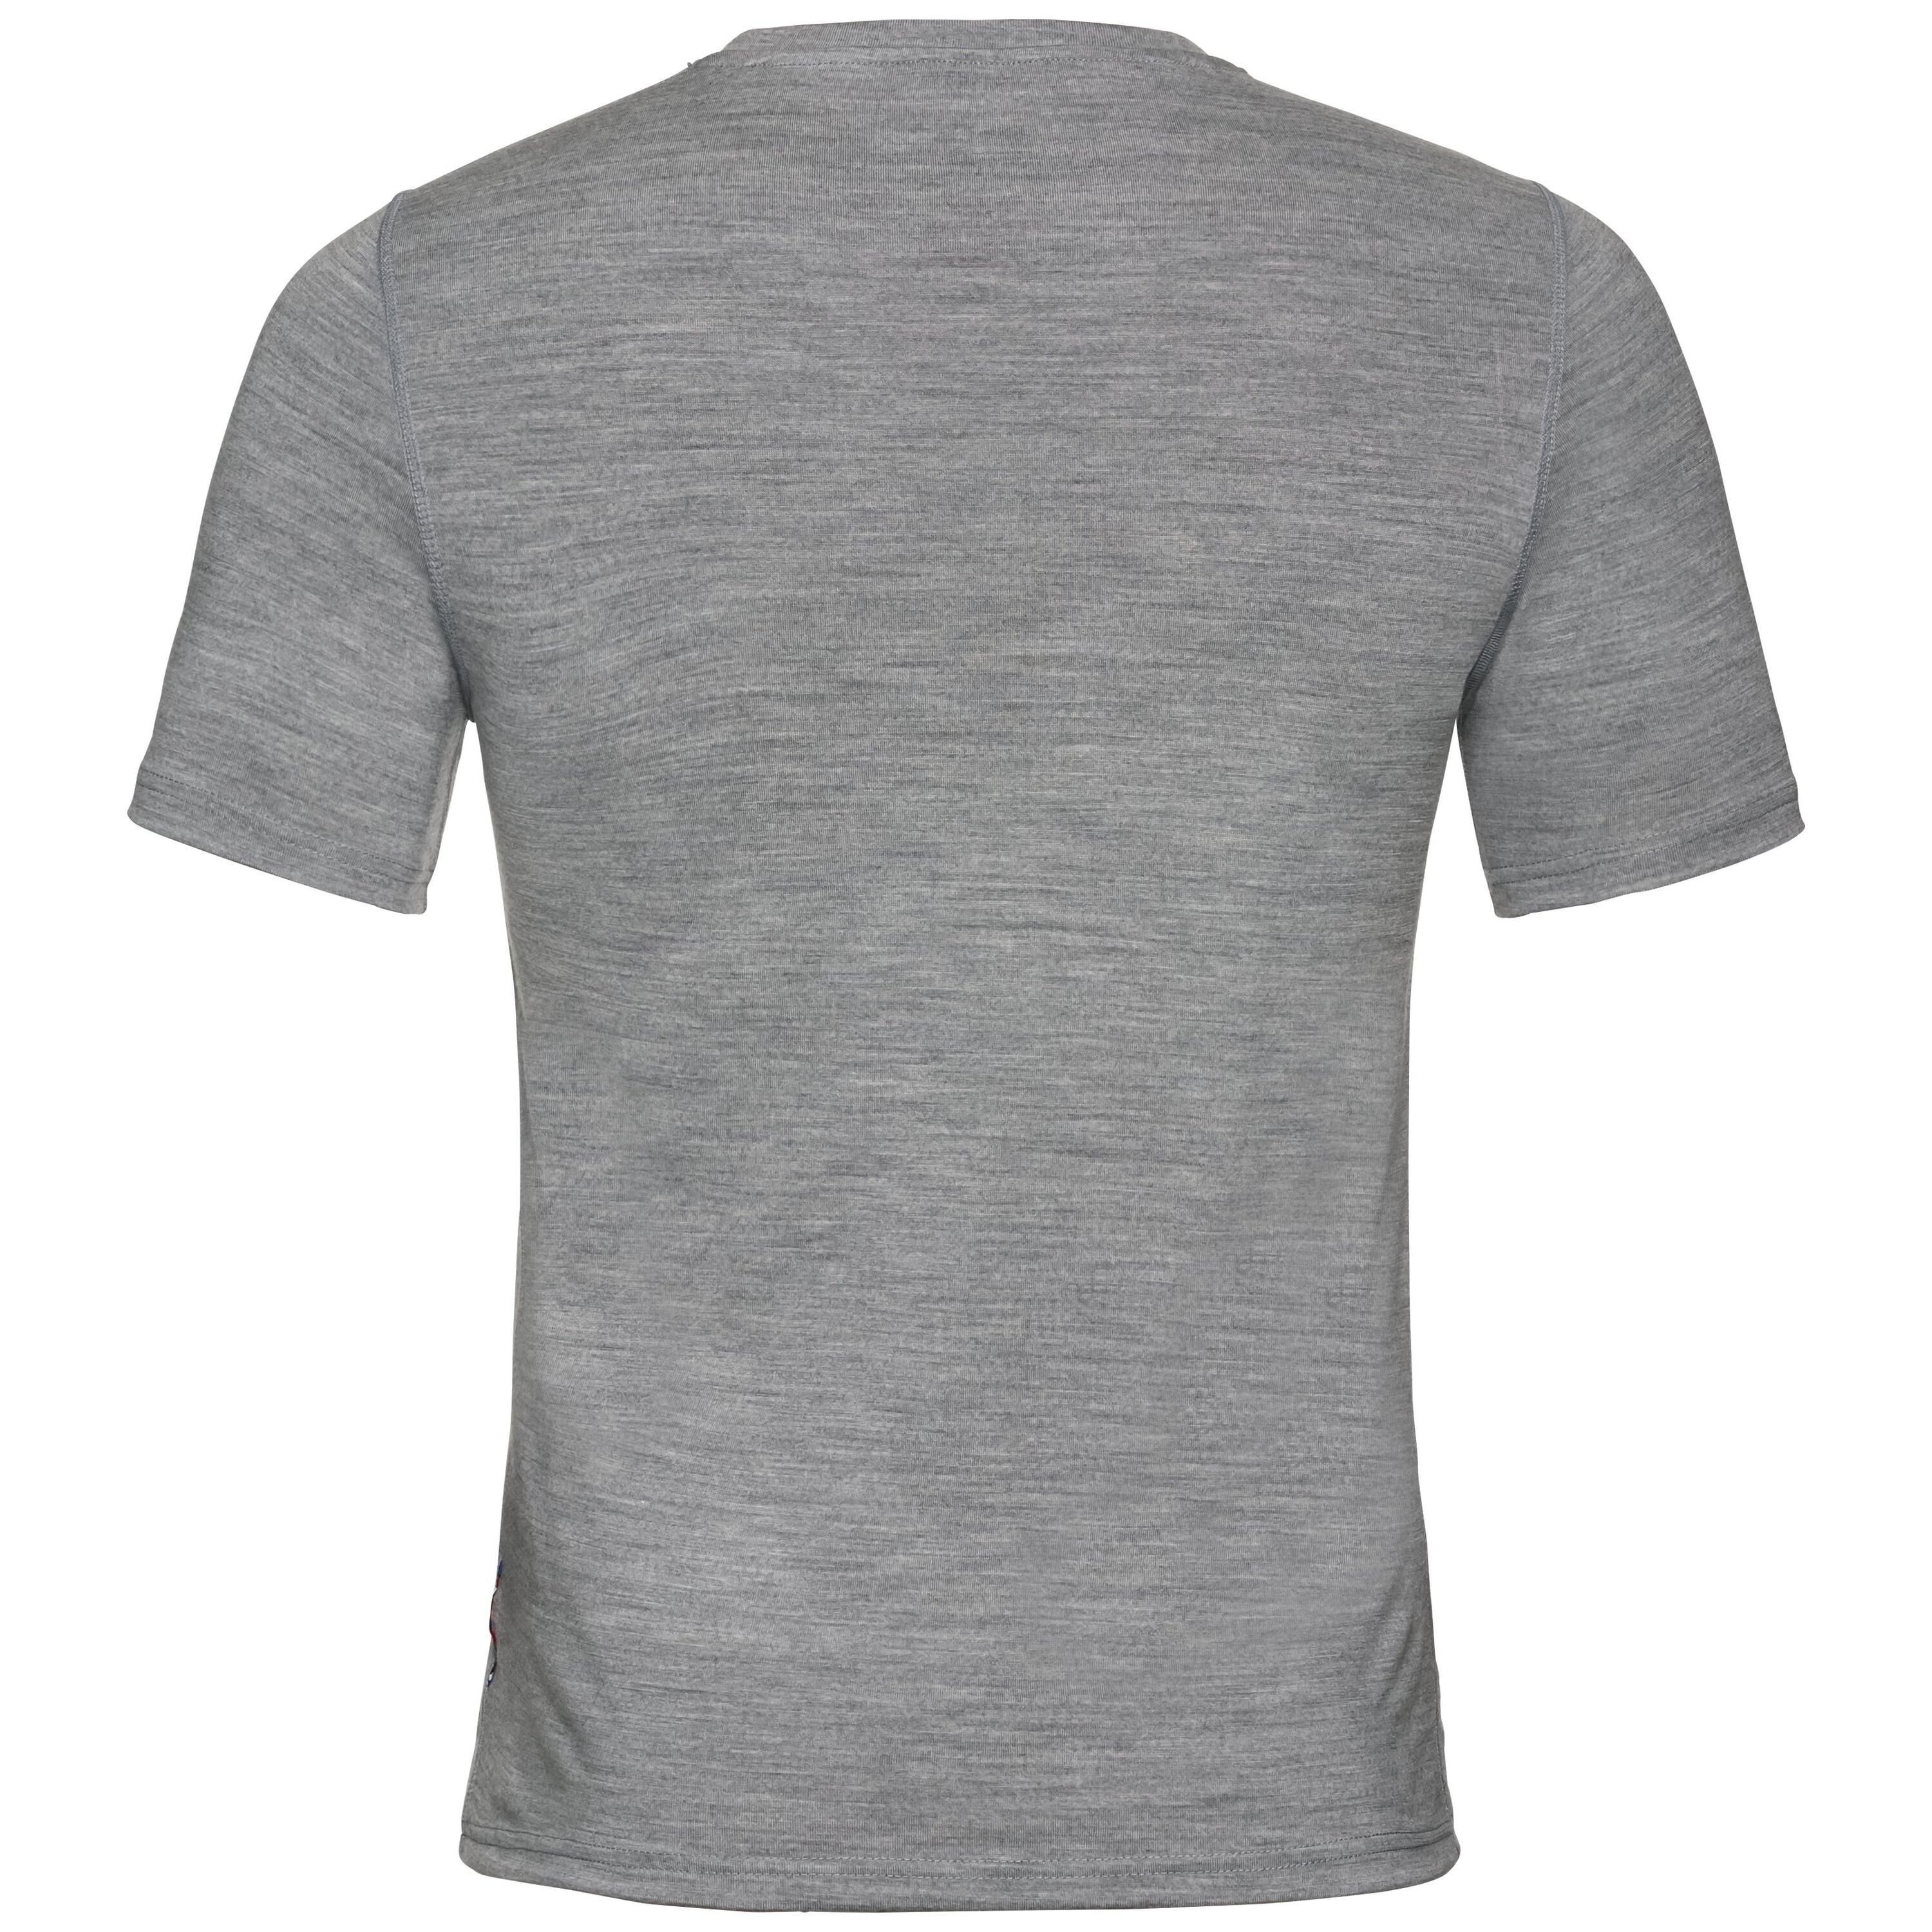 Warm grey Funktionsunterhemd Merino Herren 100% Natural melange Funktionsunterwäsche T-Shirt Odlo